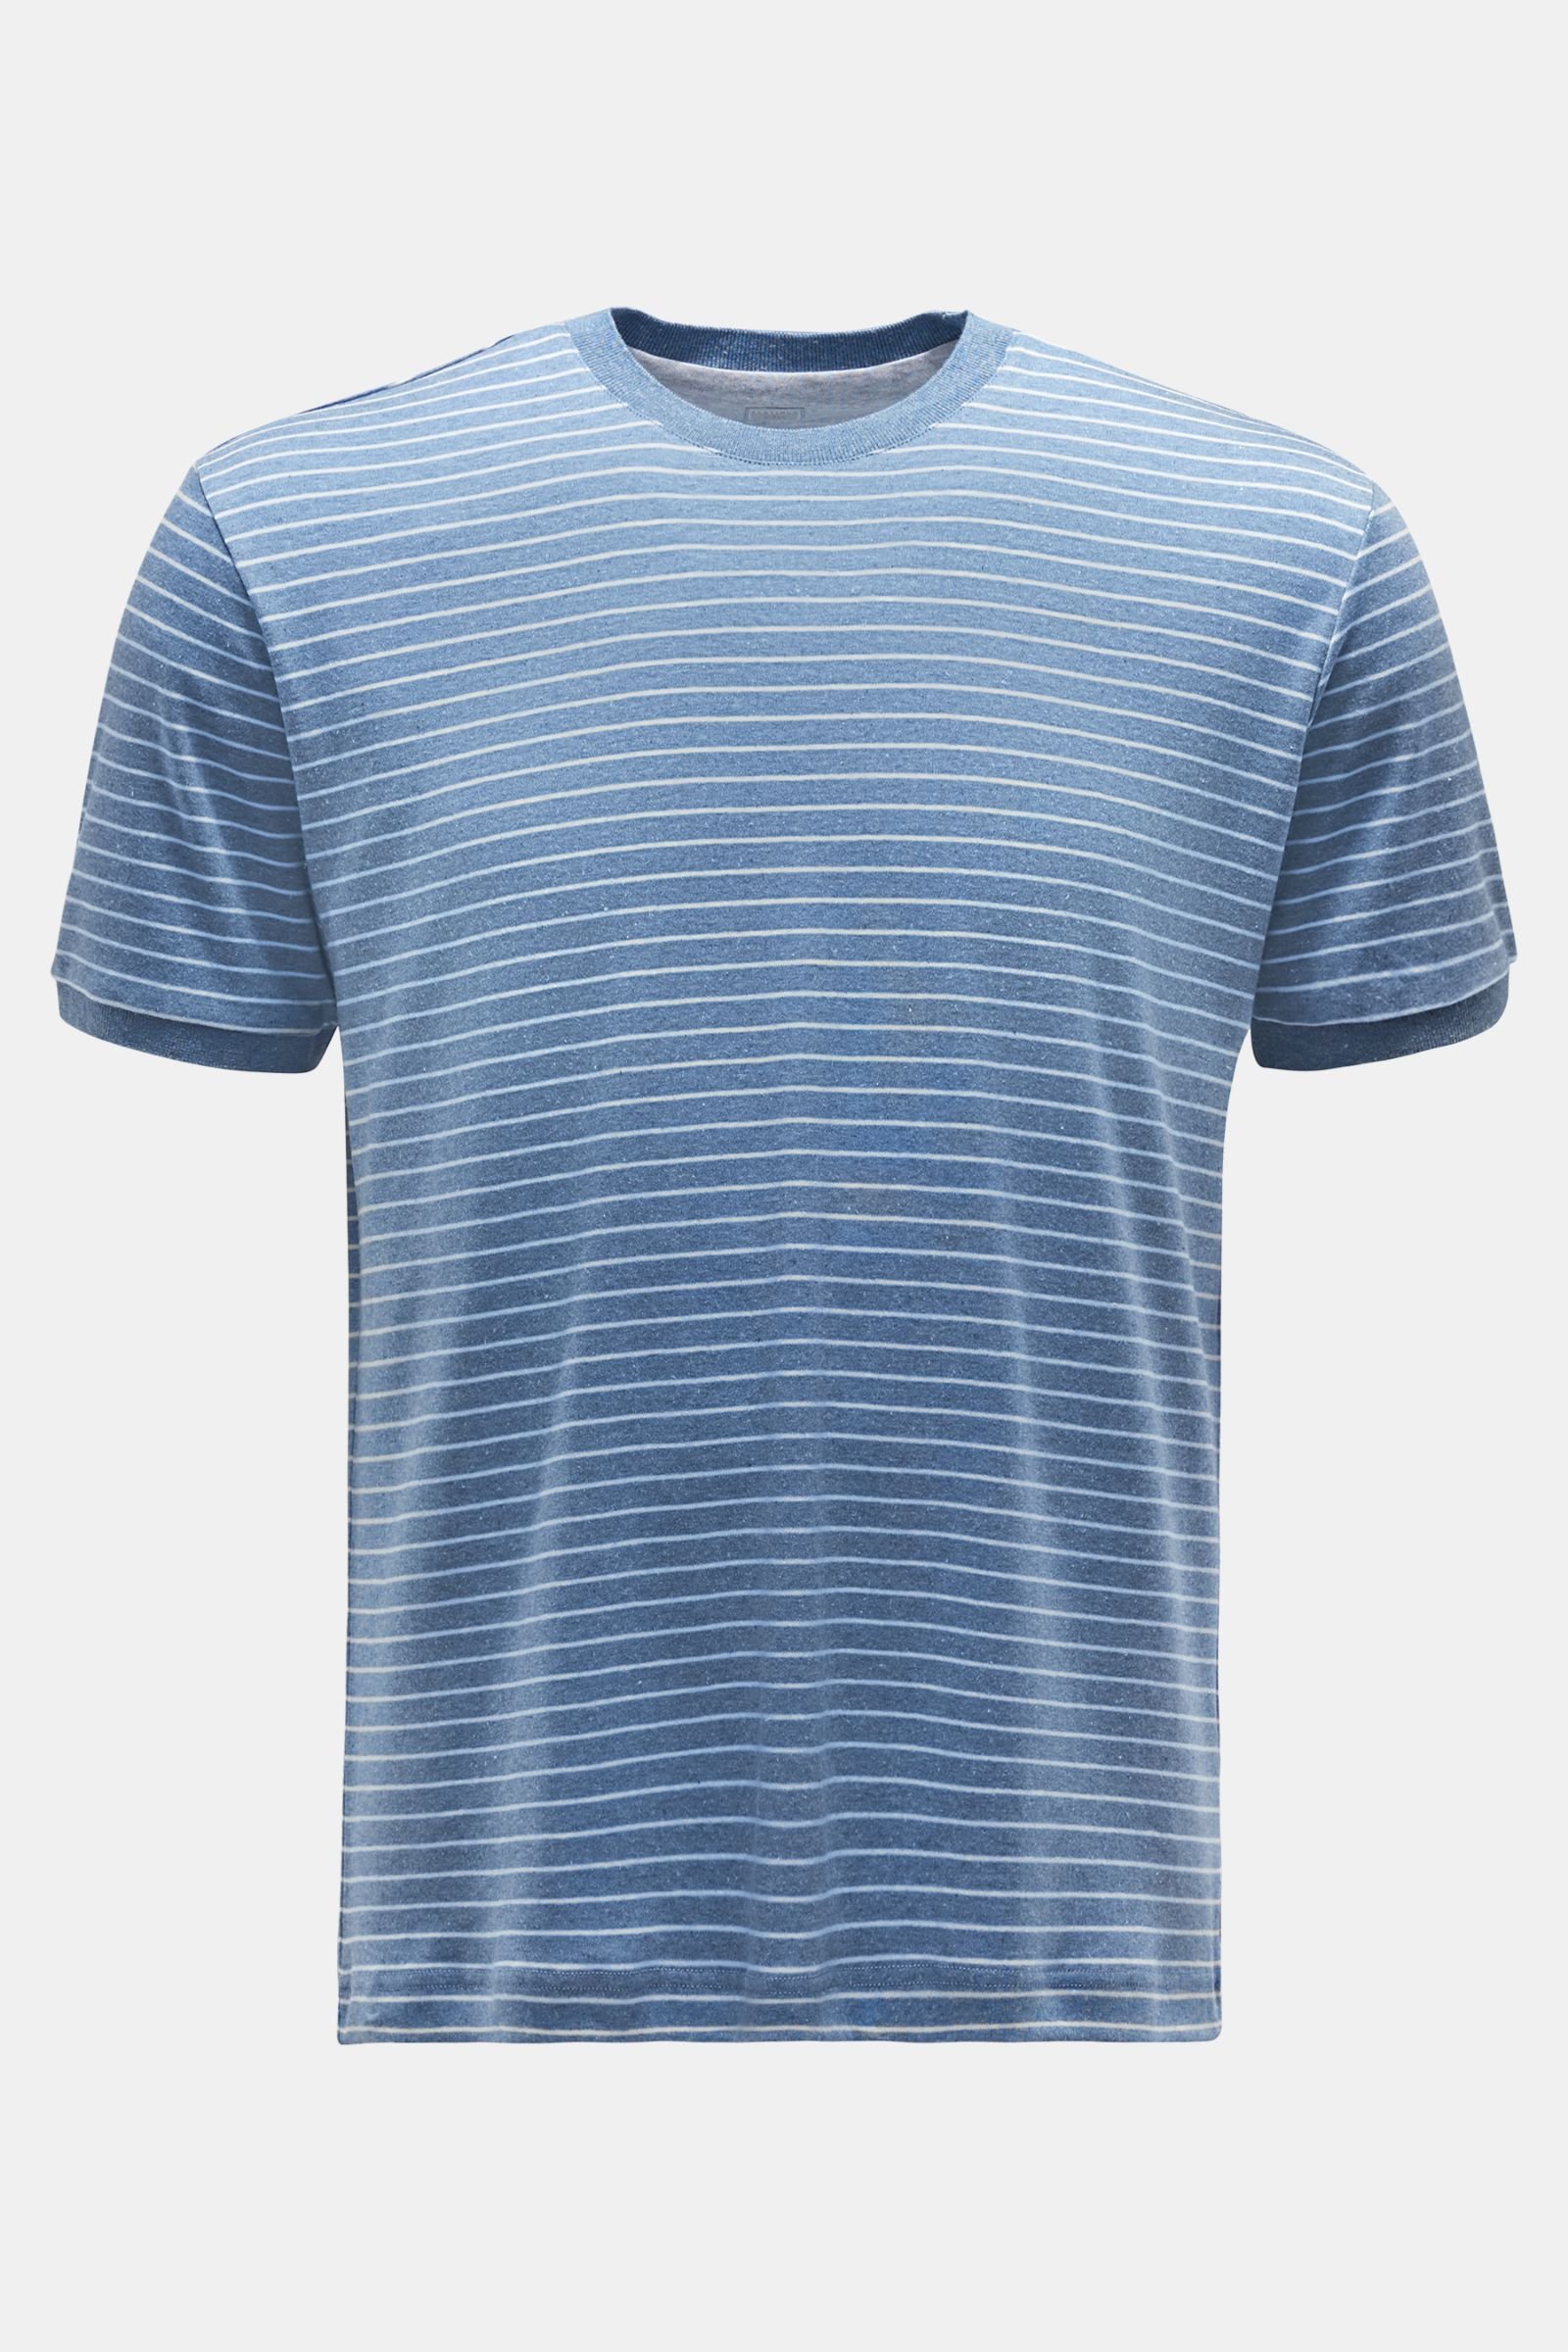 Crew neck T-shirt grey-blue/white striped